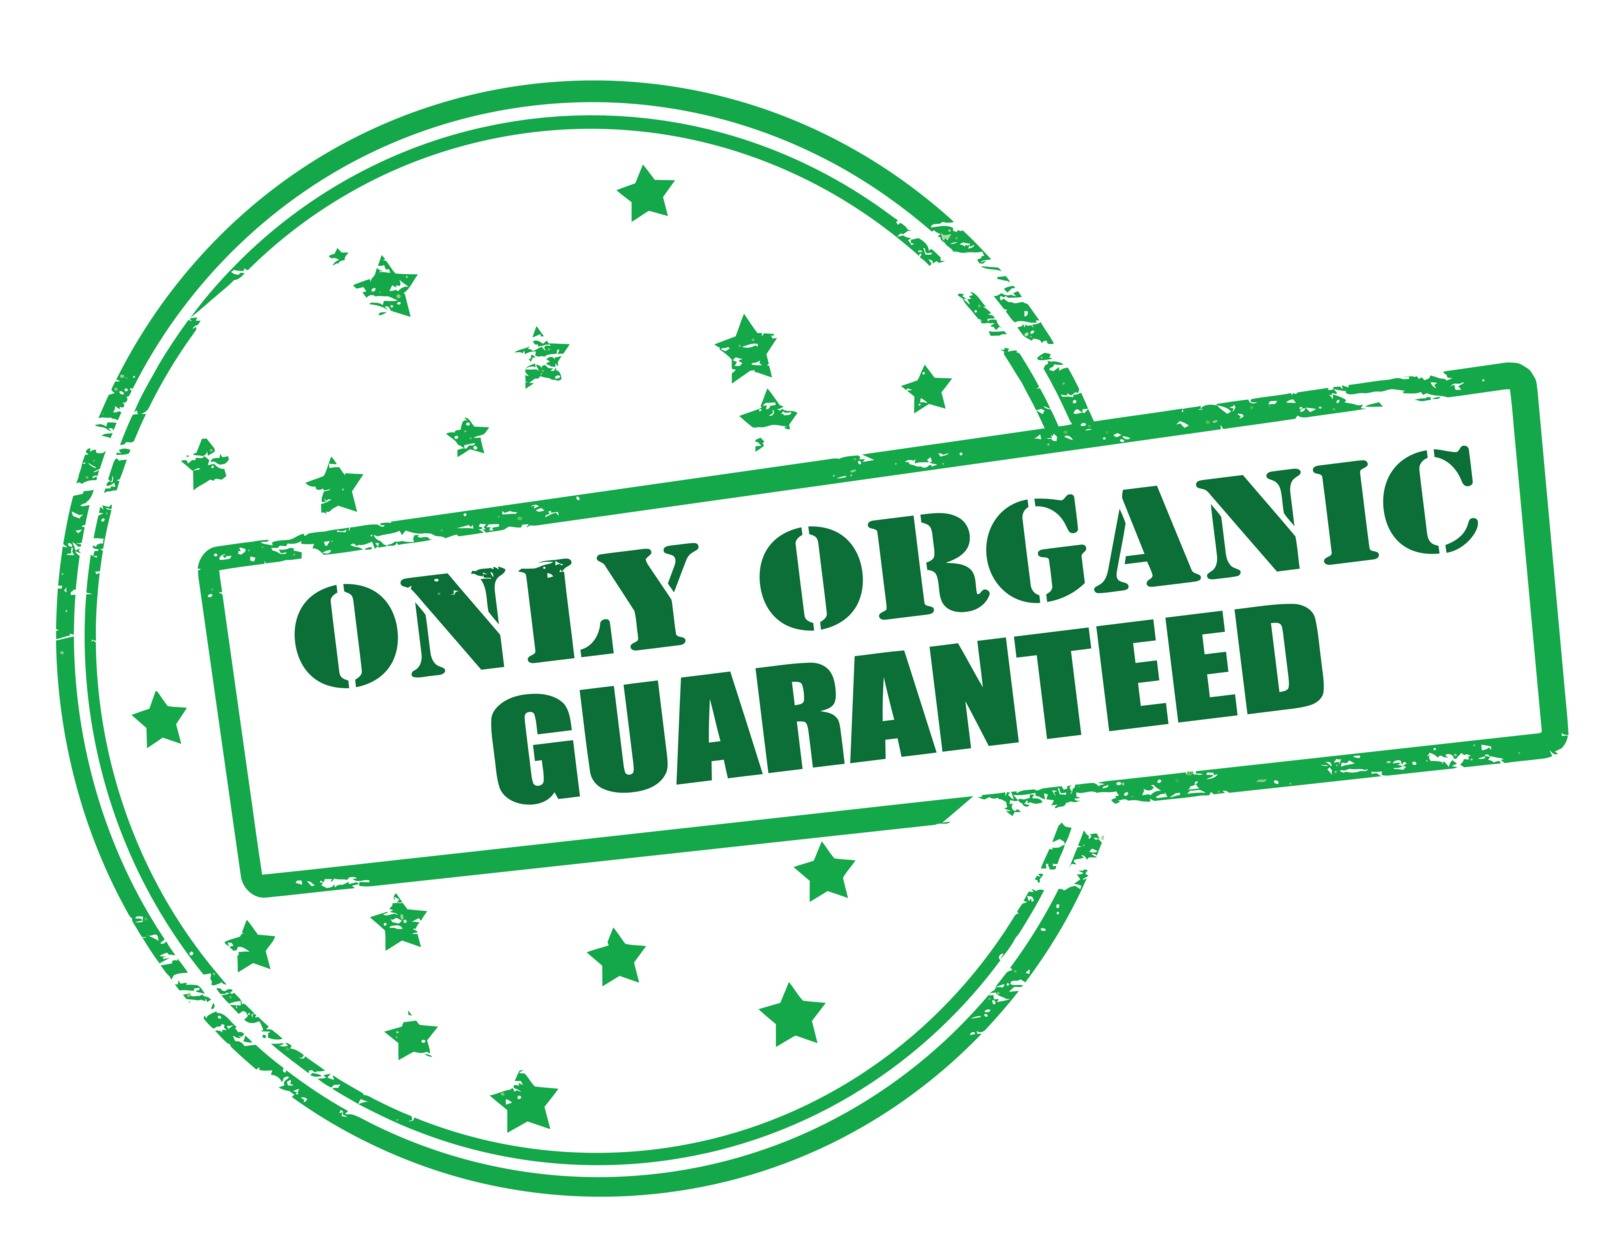 Only organic guaranteed by carmenbobo